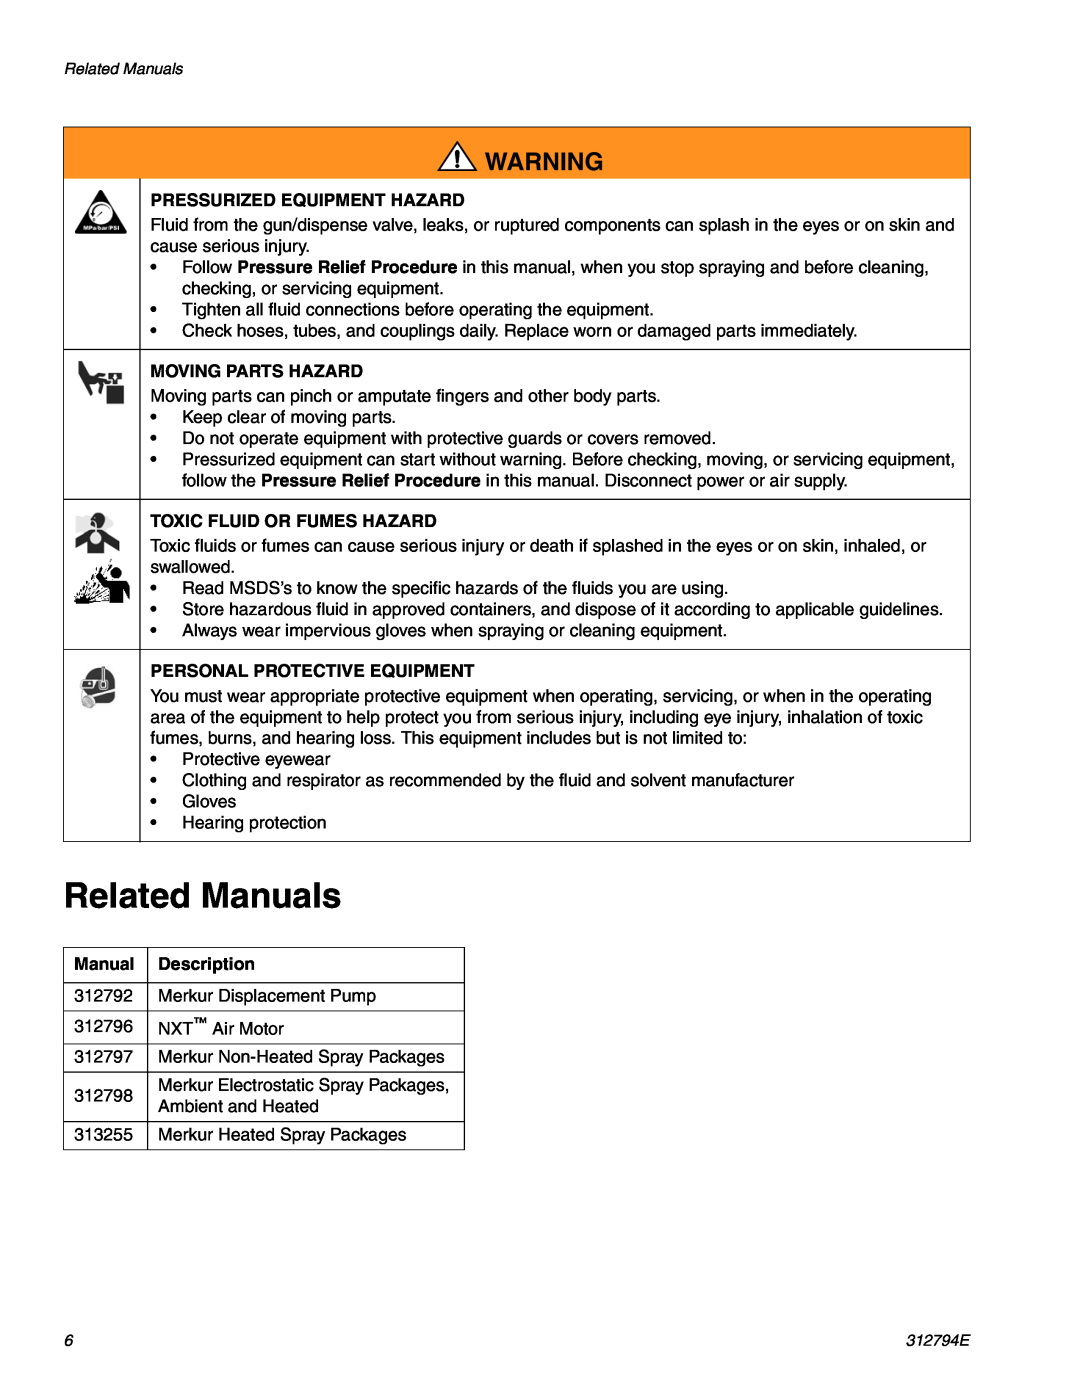 Graco 312794E Related Manuals, Pressurized Equipment Hazard, Moving Parts Hazard, Toxic Fluid Or Fumes Hazard 